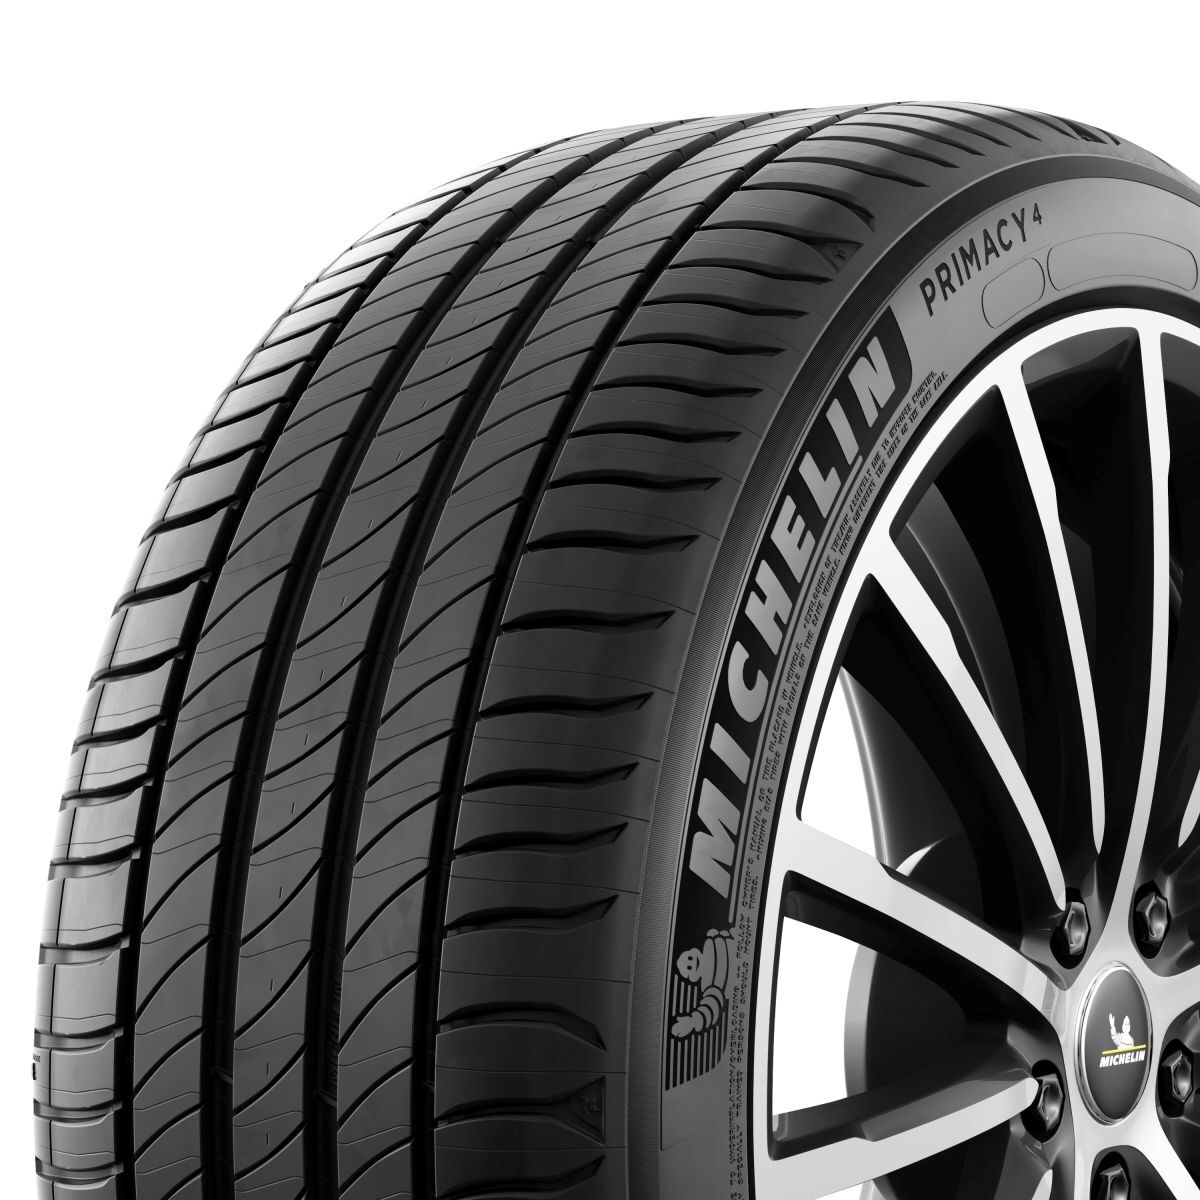 Neumáticos de verano MICHELIN Primacy 4 235/45R18 XL 98W